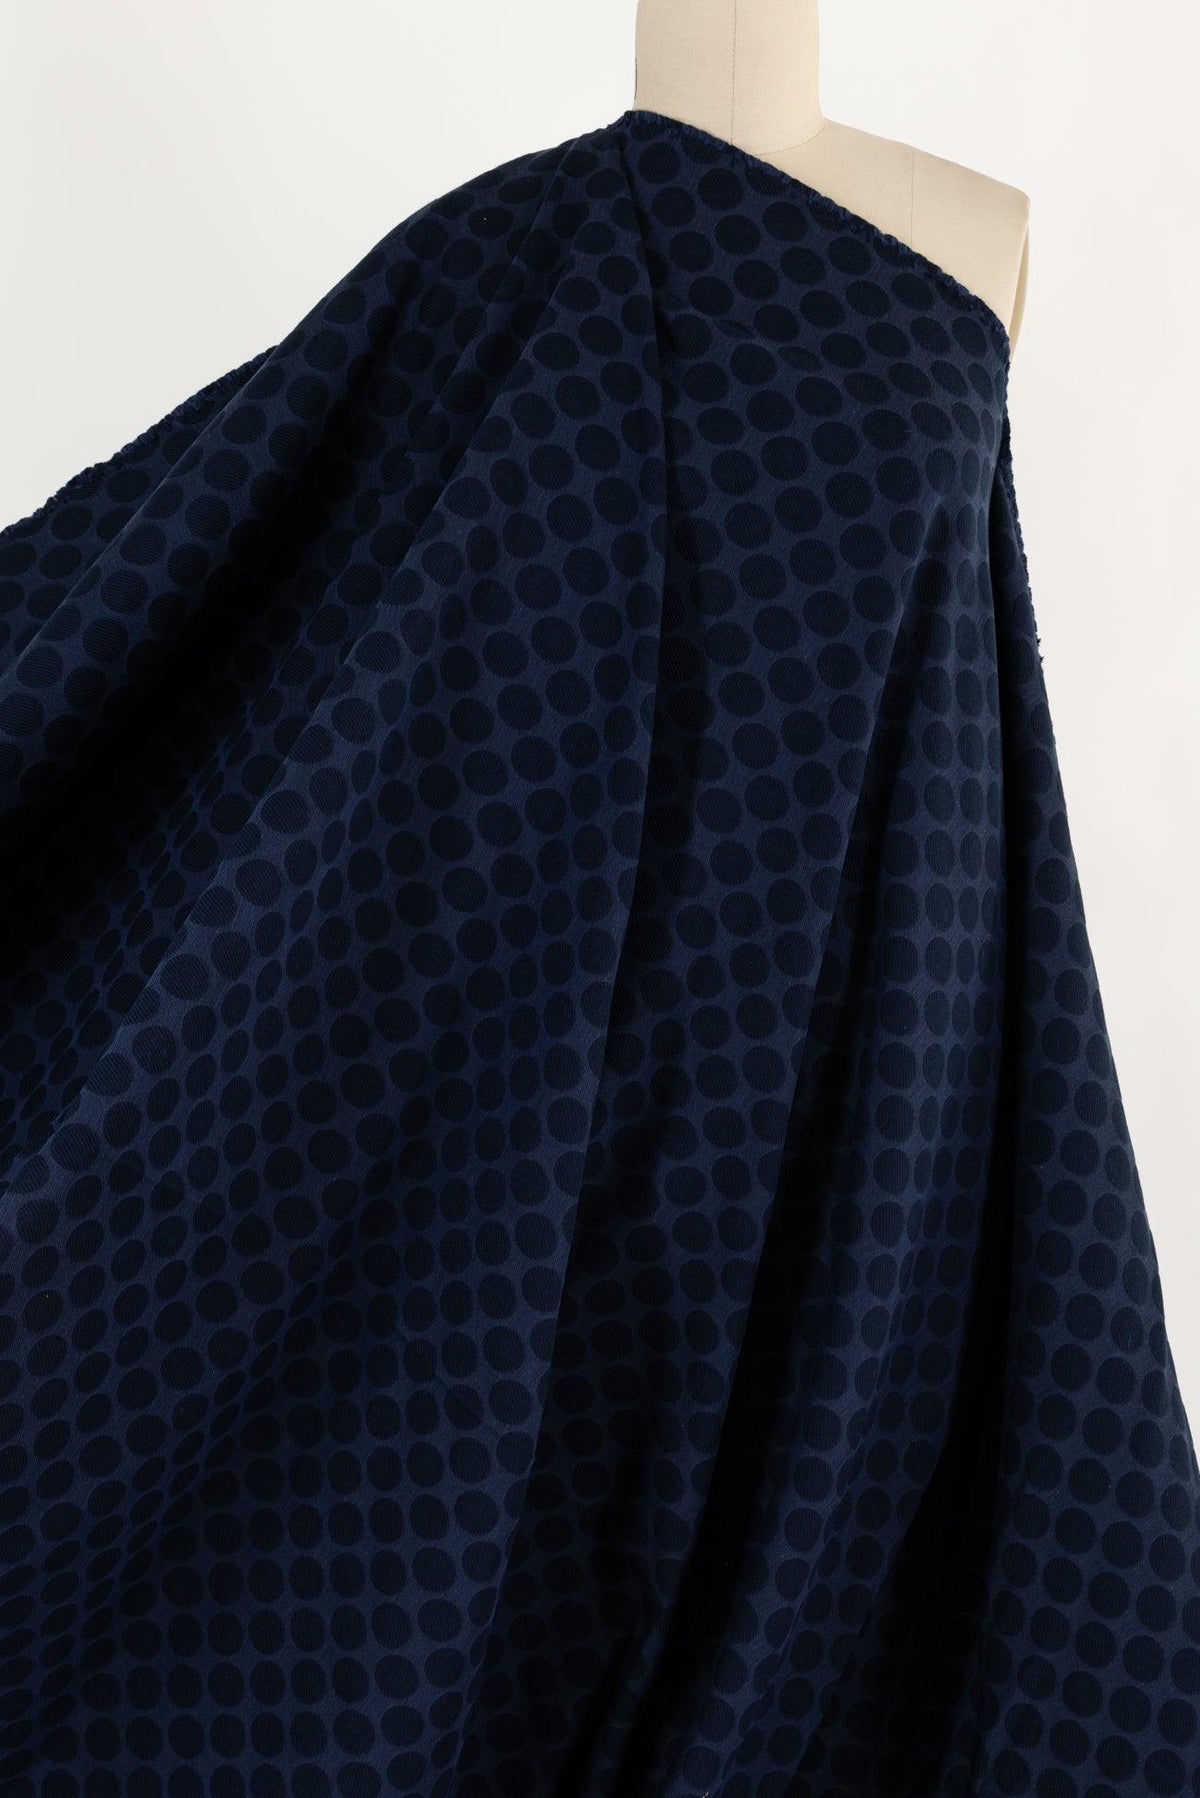 Blue On Blue Dot Italian Jacquard Woven - Marcy Tilton Fabrics